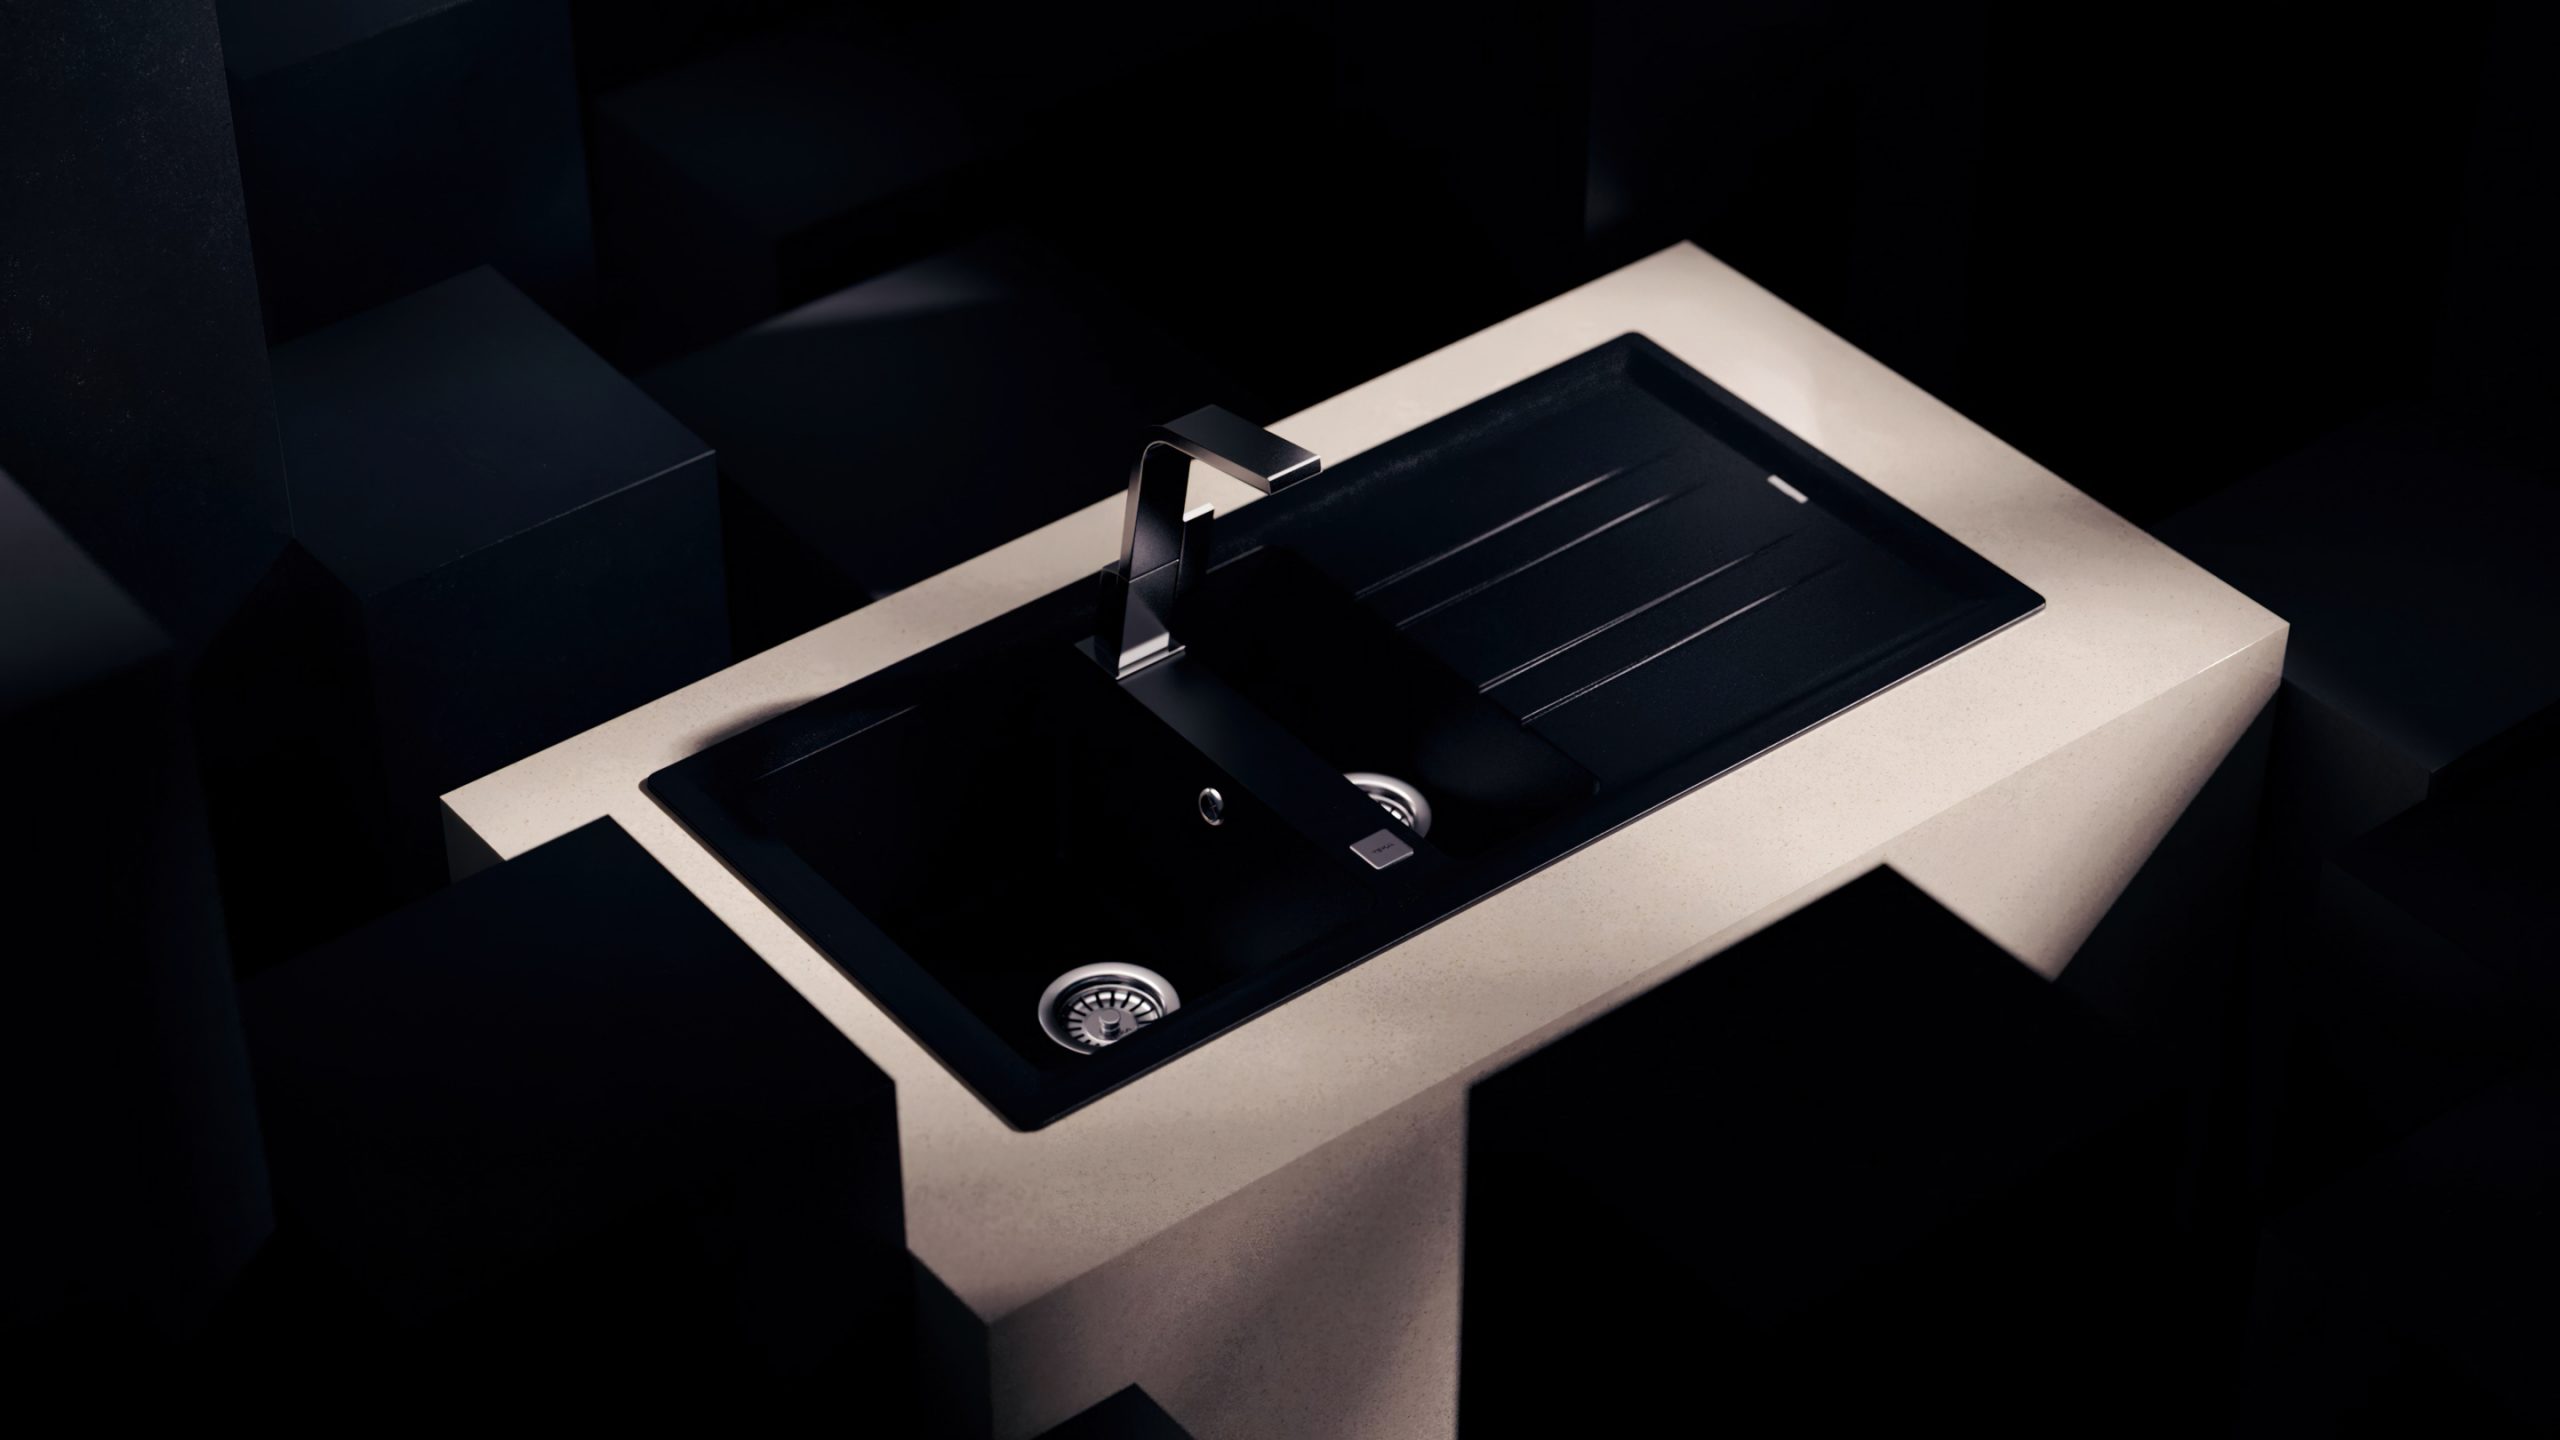 3D video for the new TEKA sink (Tegranite) created by Kutuko Studio.